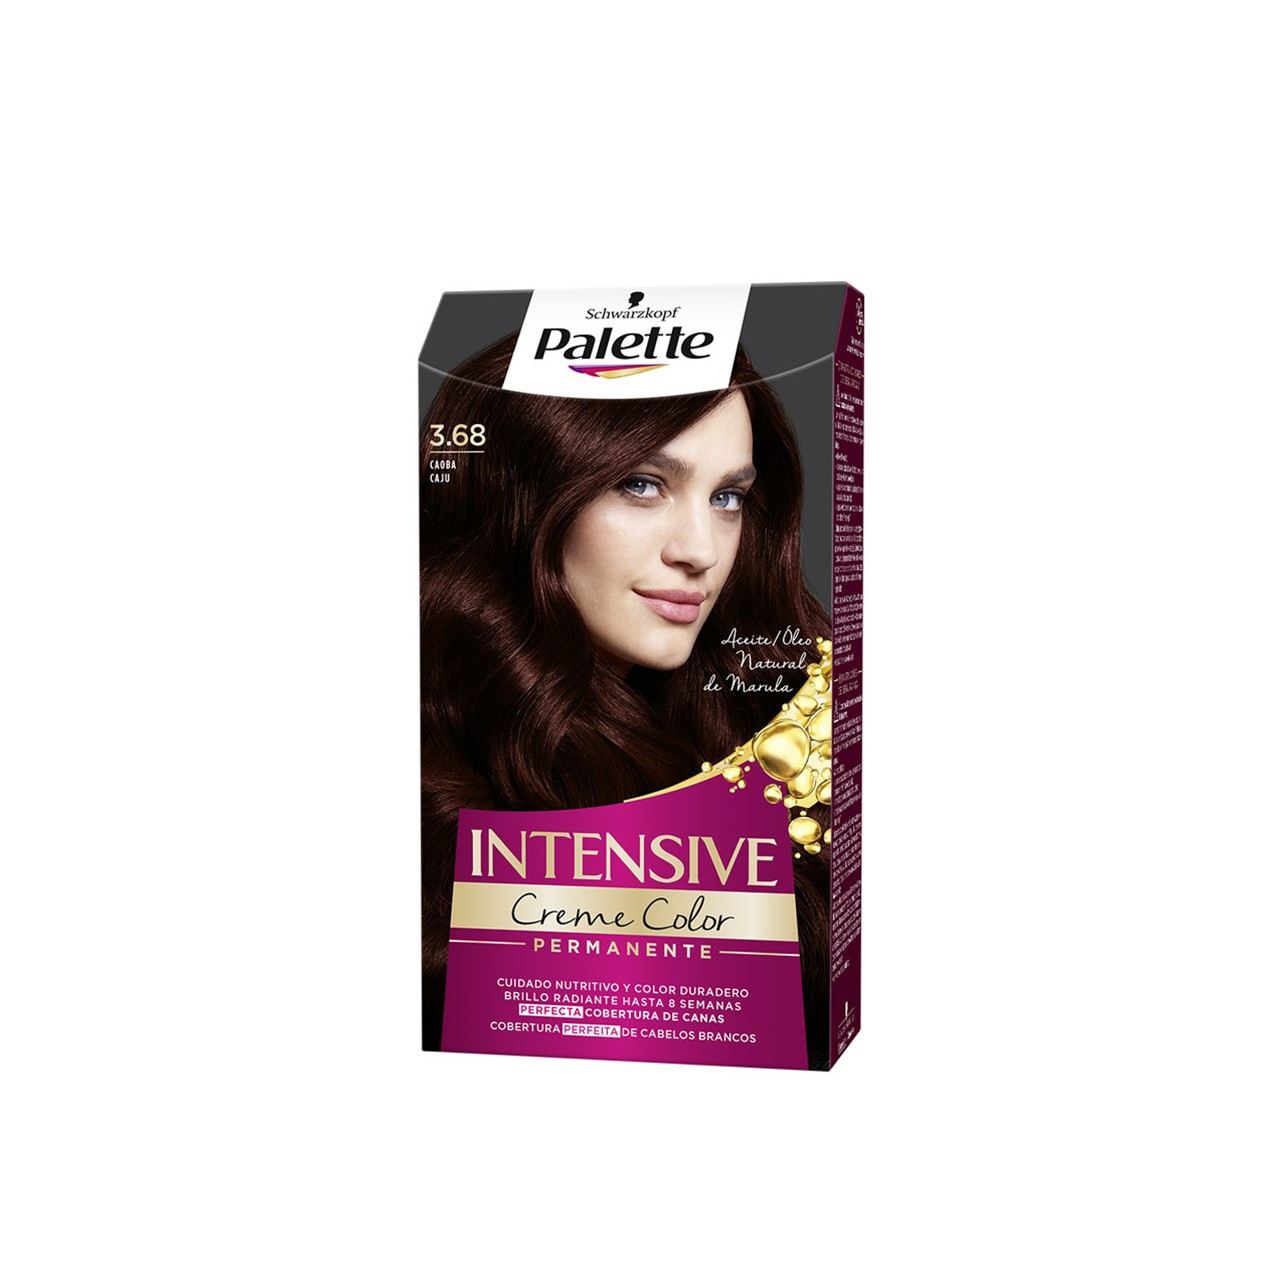 Schwarzkopf Palette Intensive Creme Color Permanent Hair Dye 3.68 Mahogany